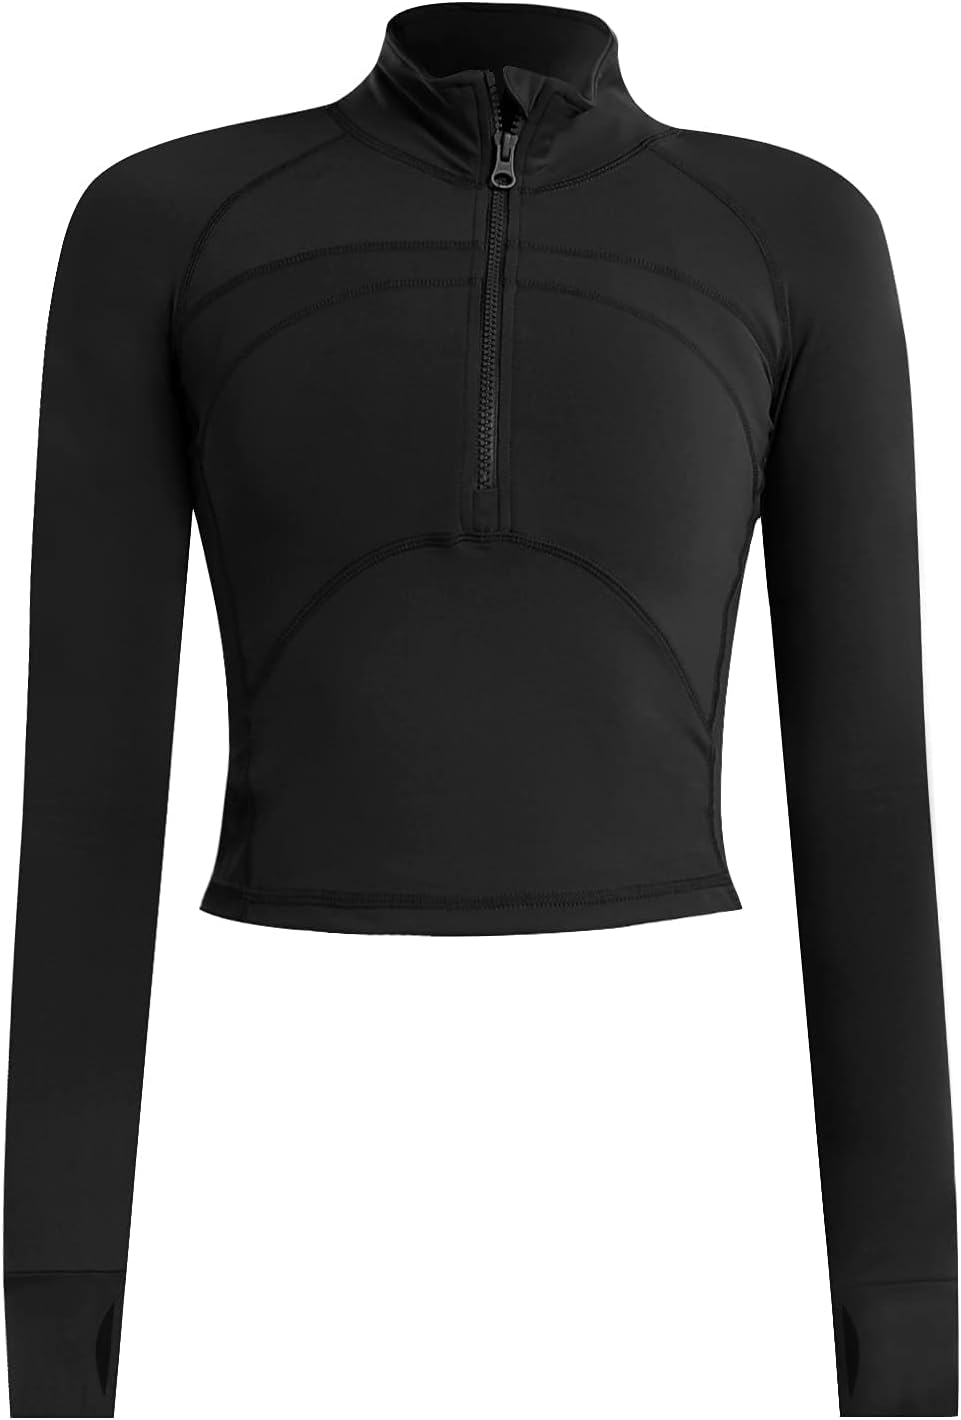 IECCP T-Shirts de Sport Femme à Manche Longues Tops 1/2 Fermeture Éclair Fitness Running Yoga Tee Shirt - fitnessterapy